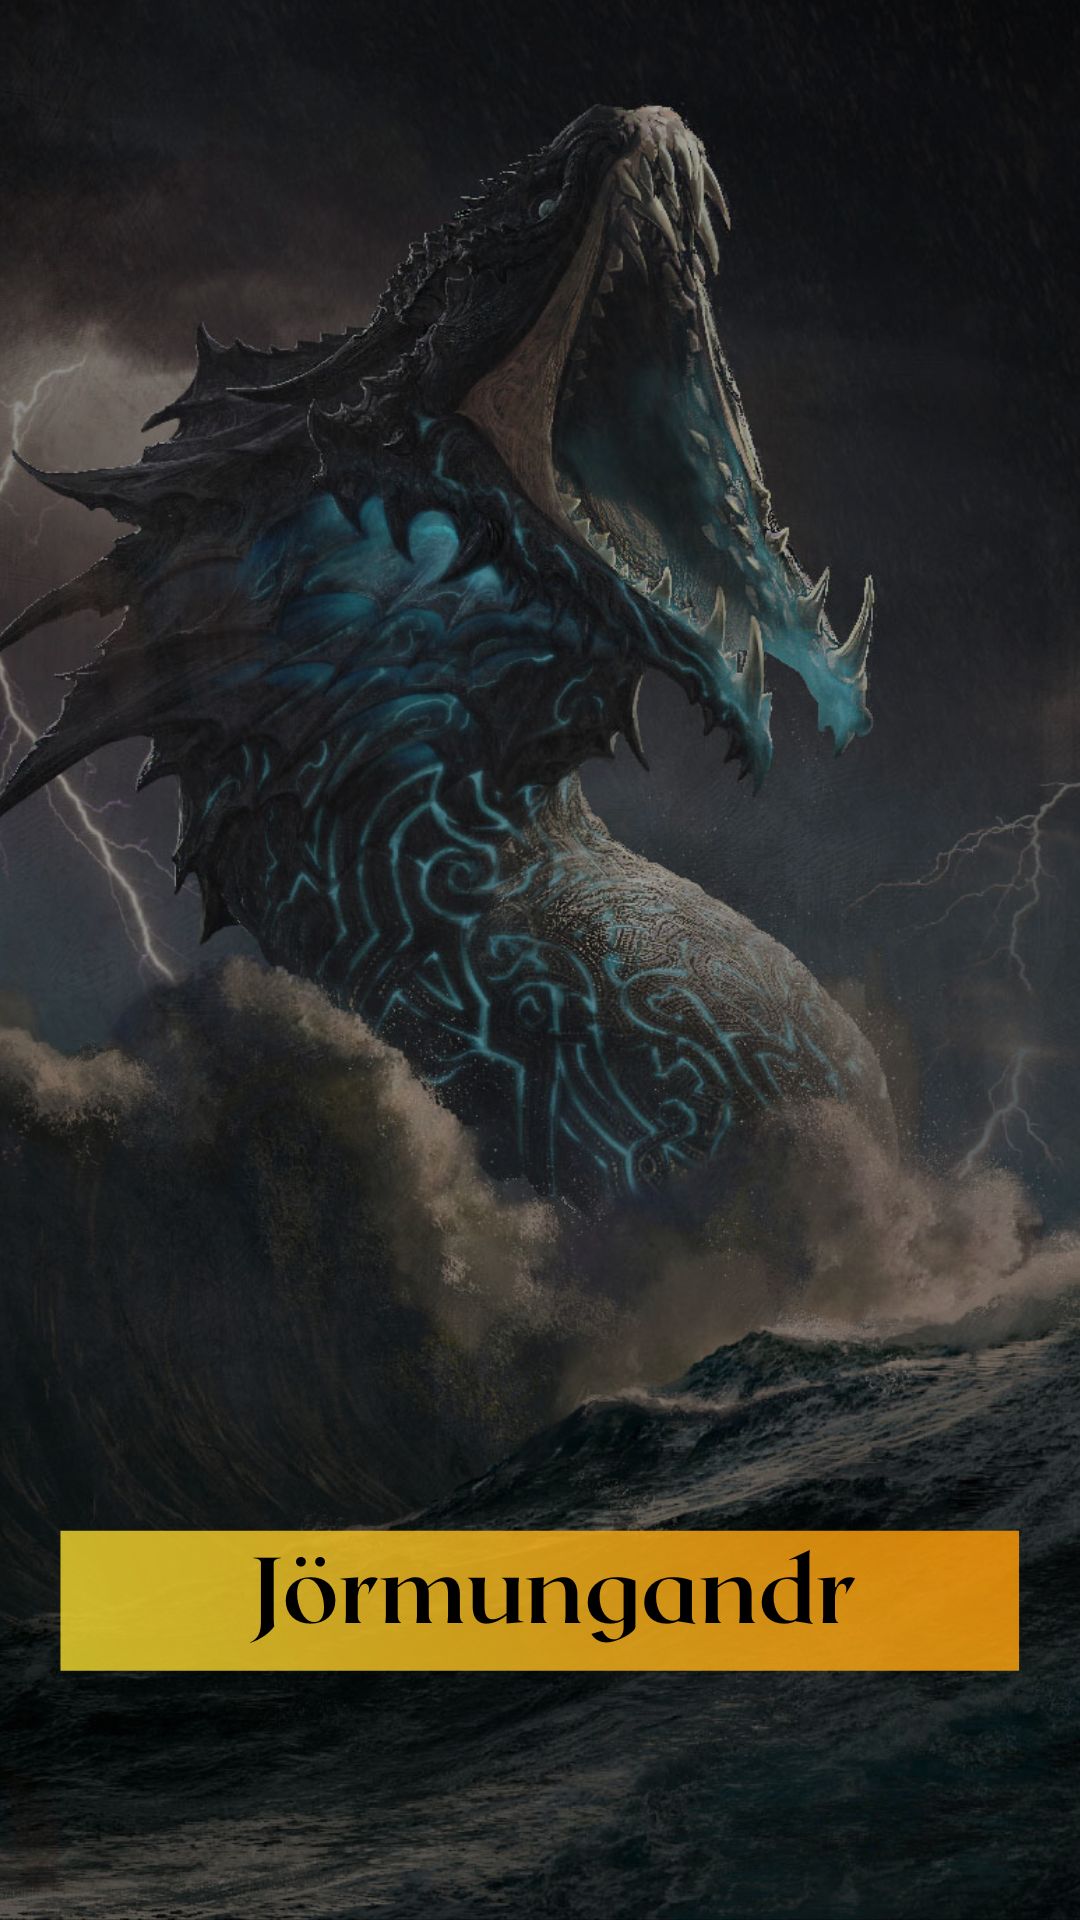 Jormungandr : Midgard Serpent in Norse Mytholog